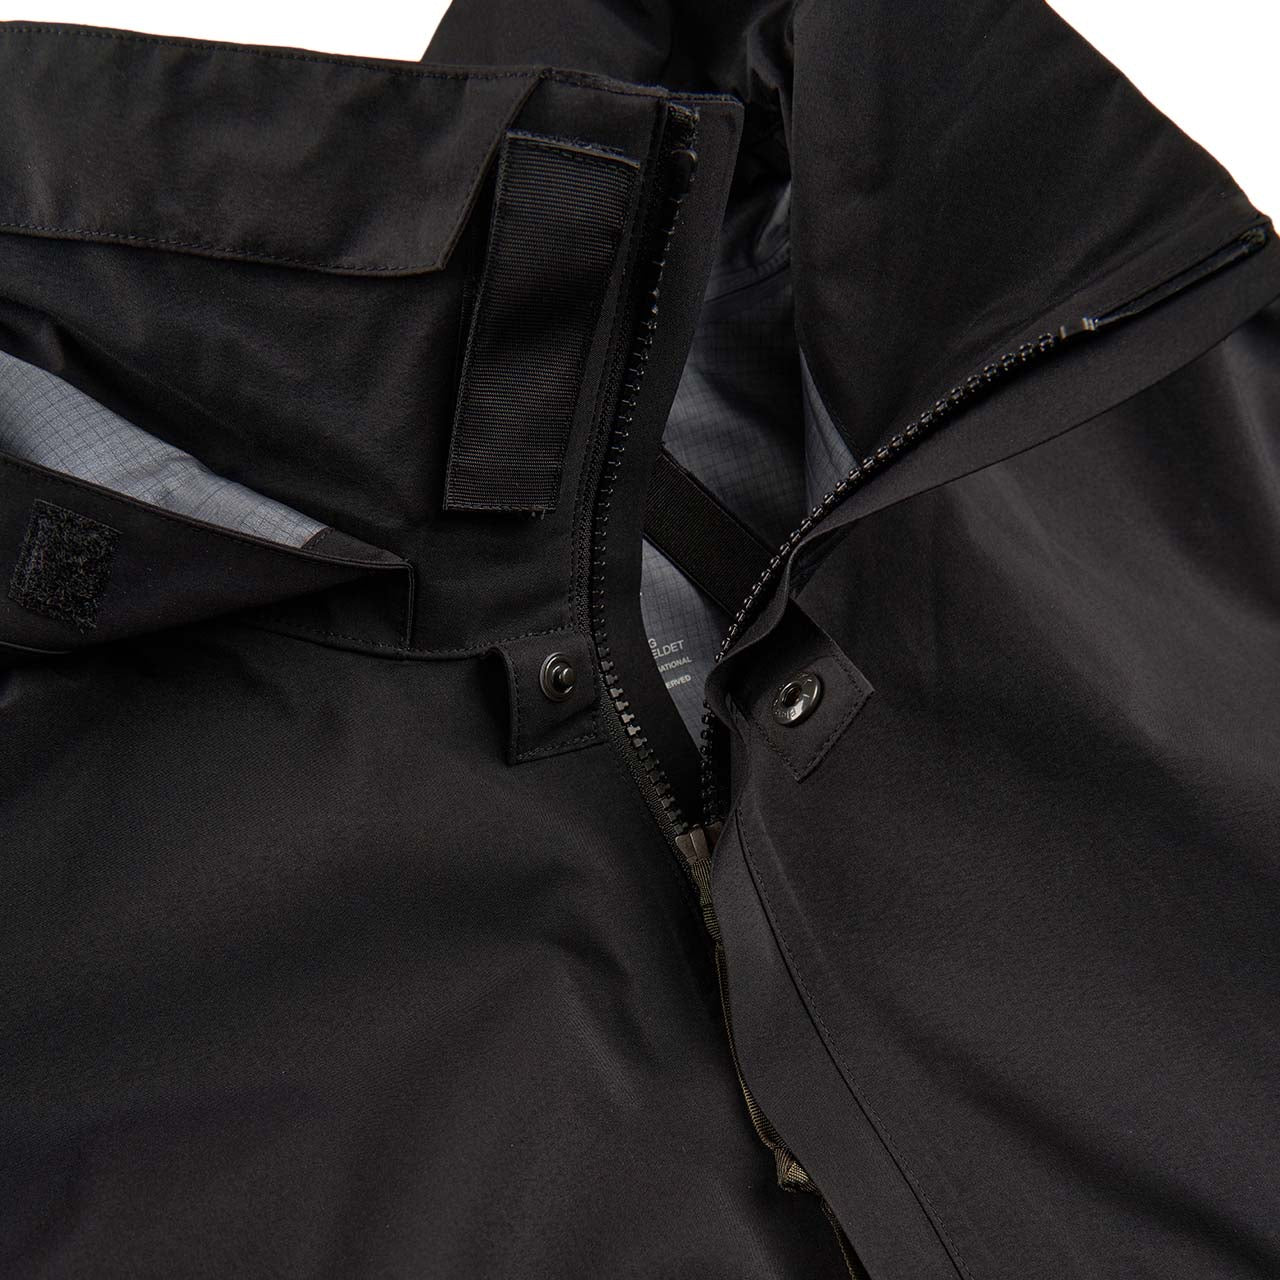 acronym j101-gt 3l gore-tex jacket (black)